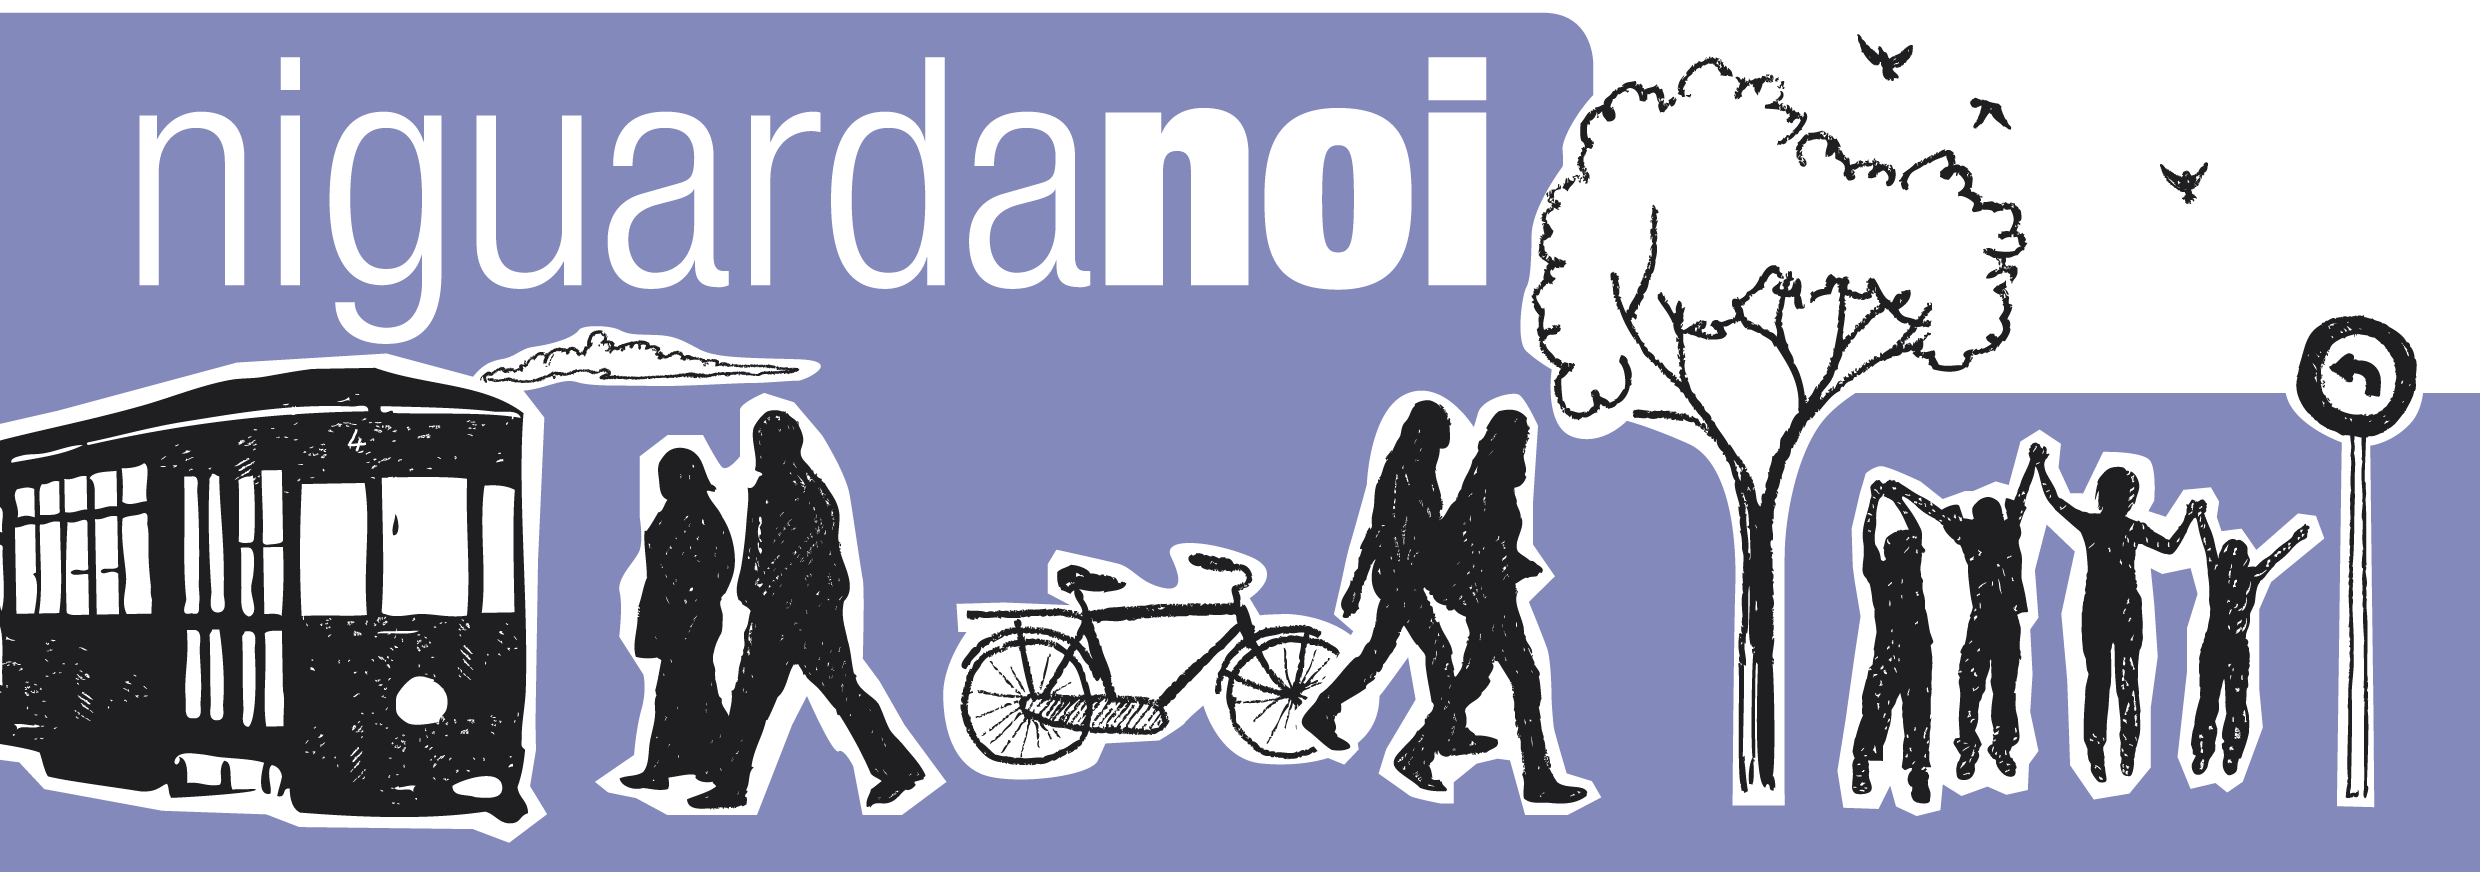 NiguardaNoi logo